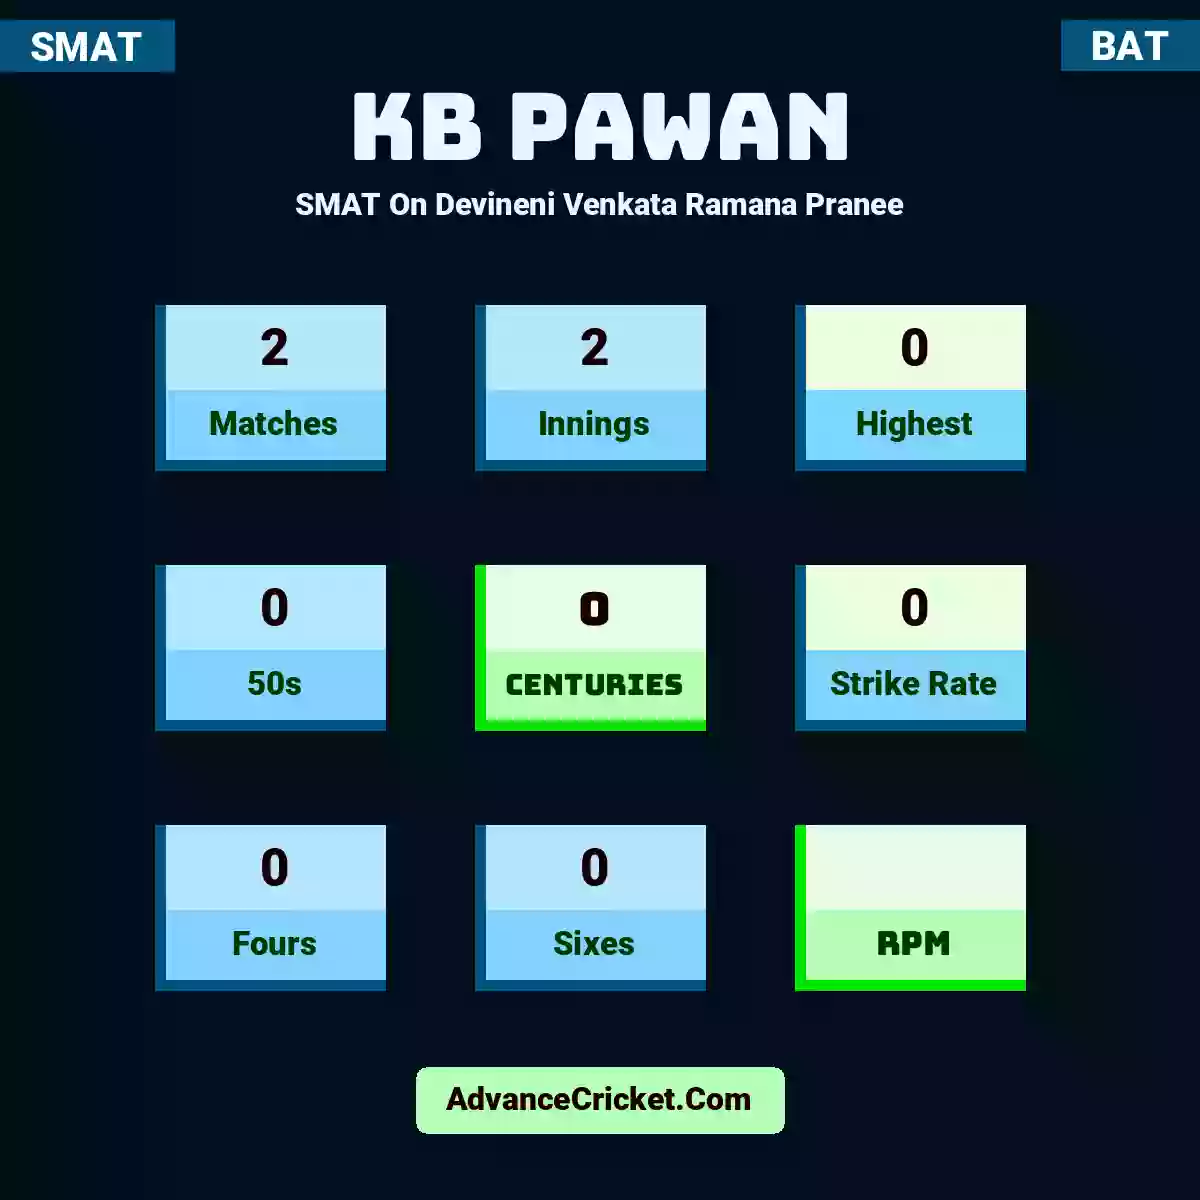 KB Pawan SMAT  On Devineni Venkata Ramana Pranee, KB Pawan played 2 matches, scored 0 runs as highest, 0 half-centuries, and 0 centuries, with a strike rate of 0. K.Pawan hit 0 fours and 0 sixes.